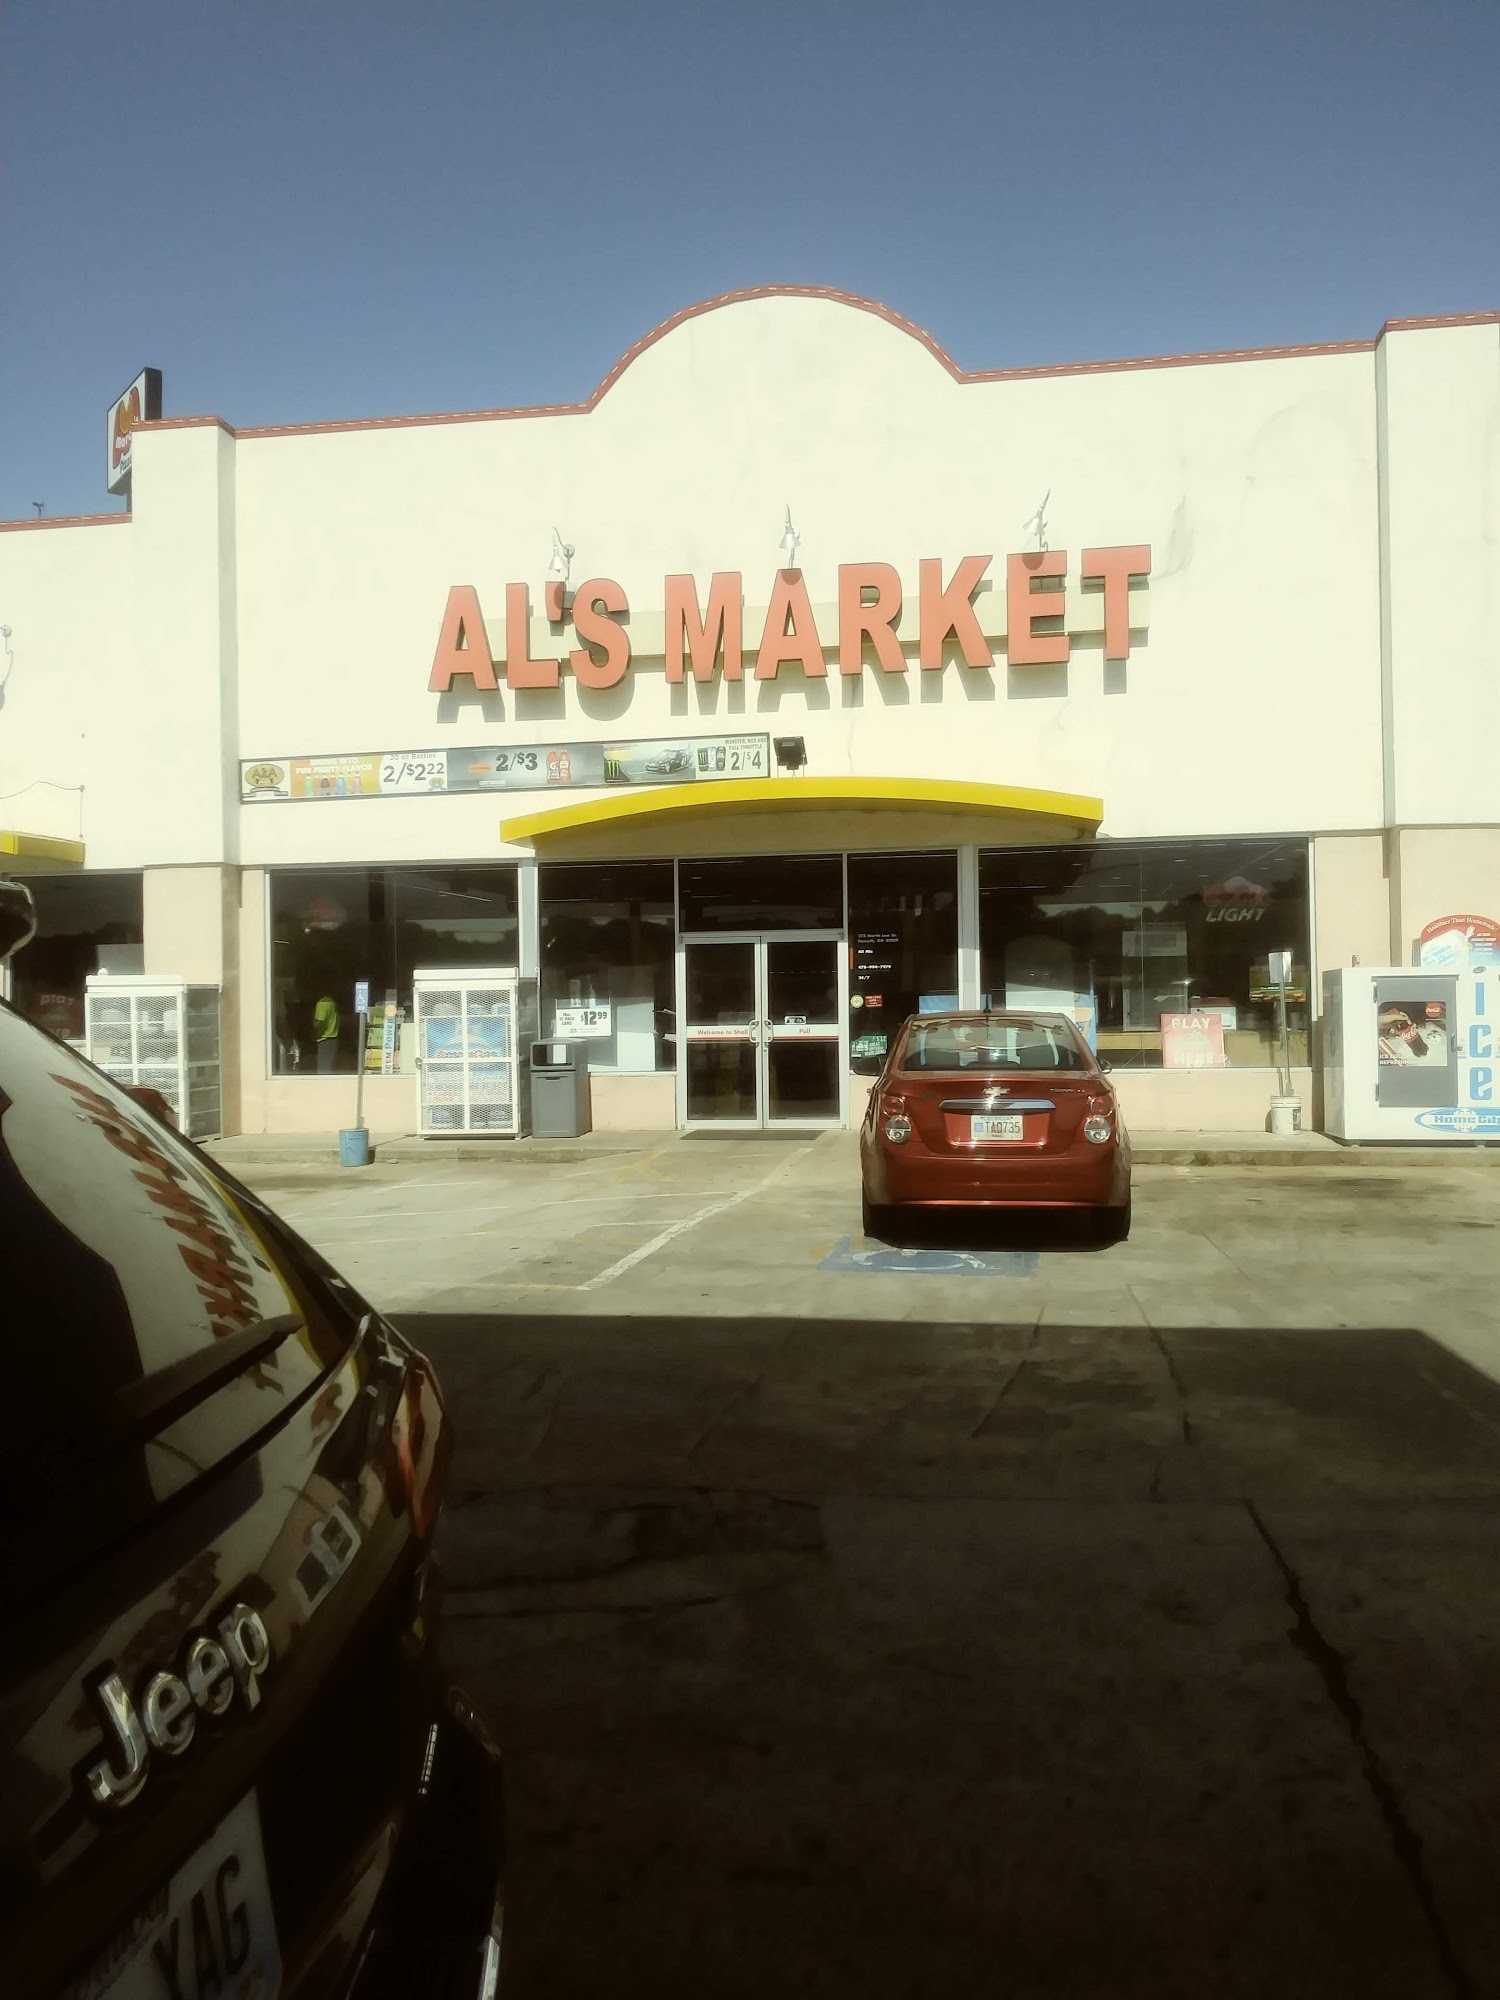 Al's Market